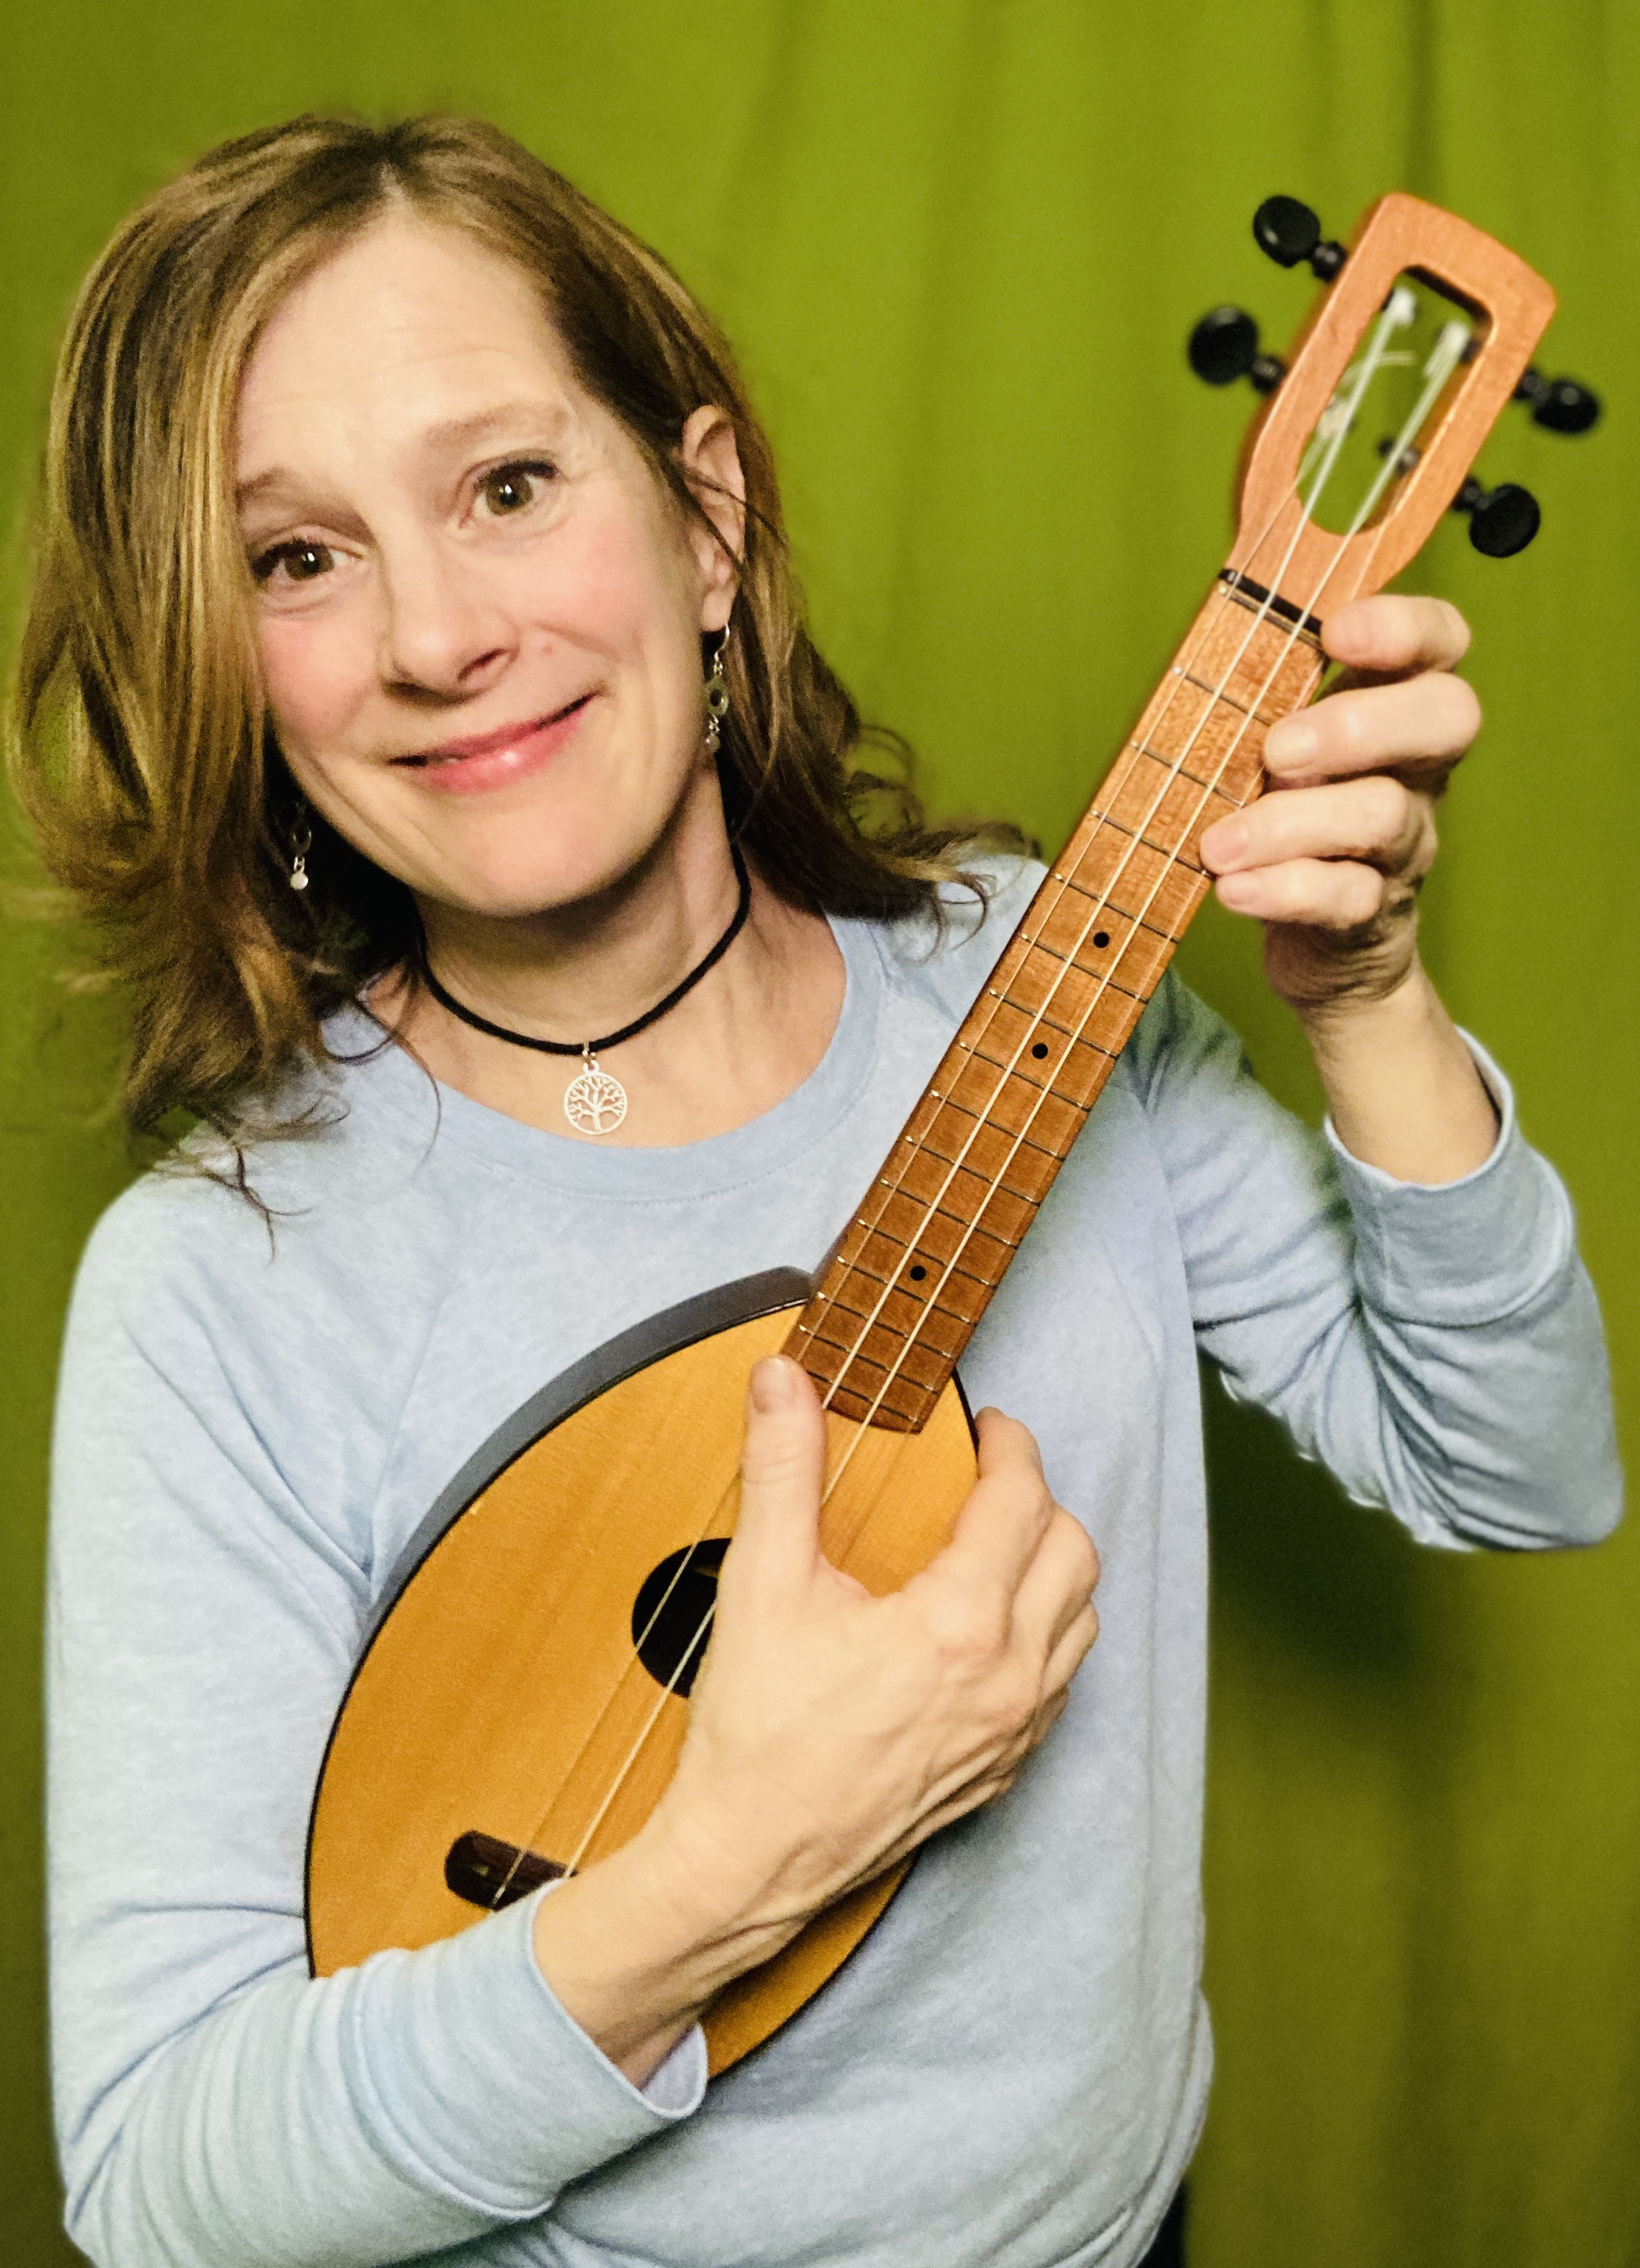 Presenter Julie Stepanek smiling at the camera and holding a ukulele 